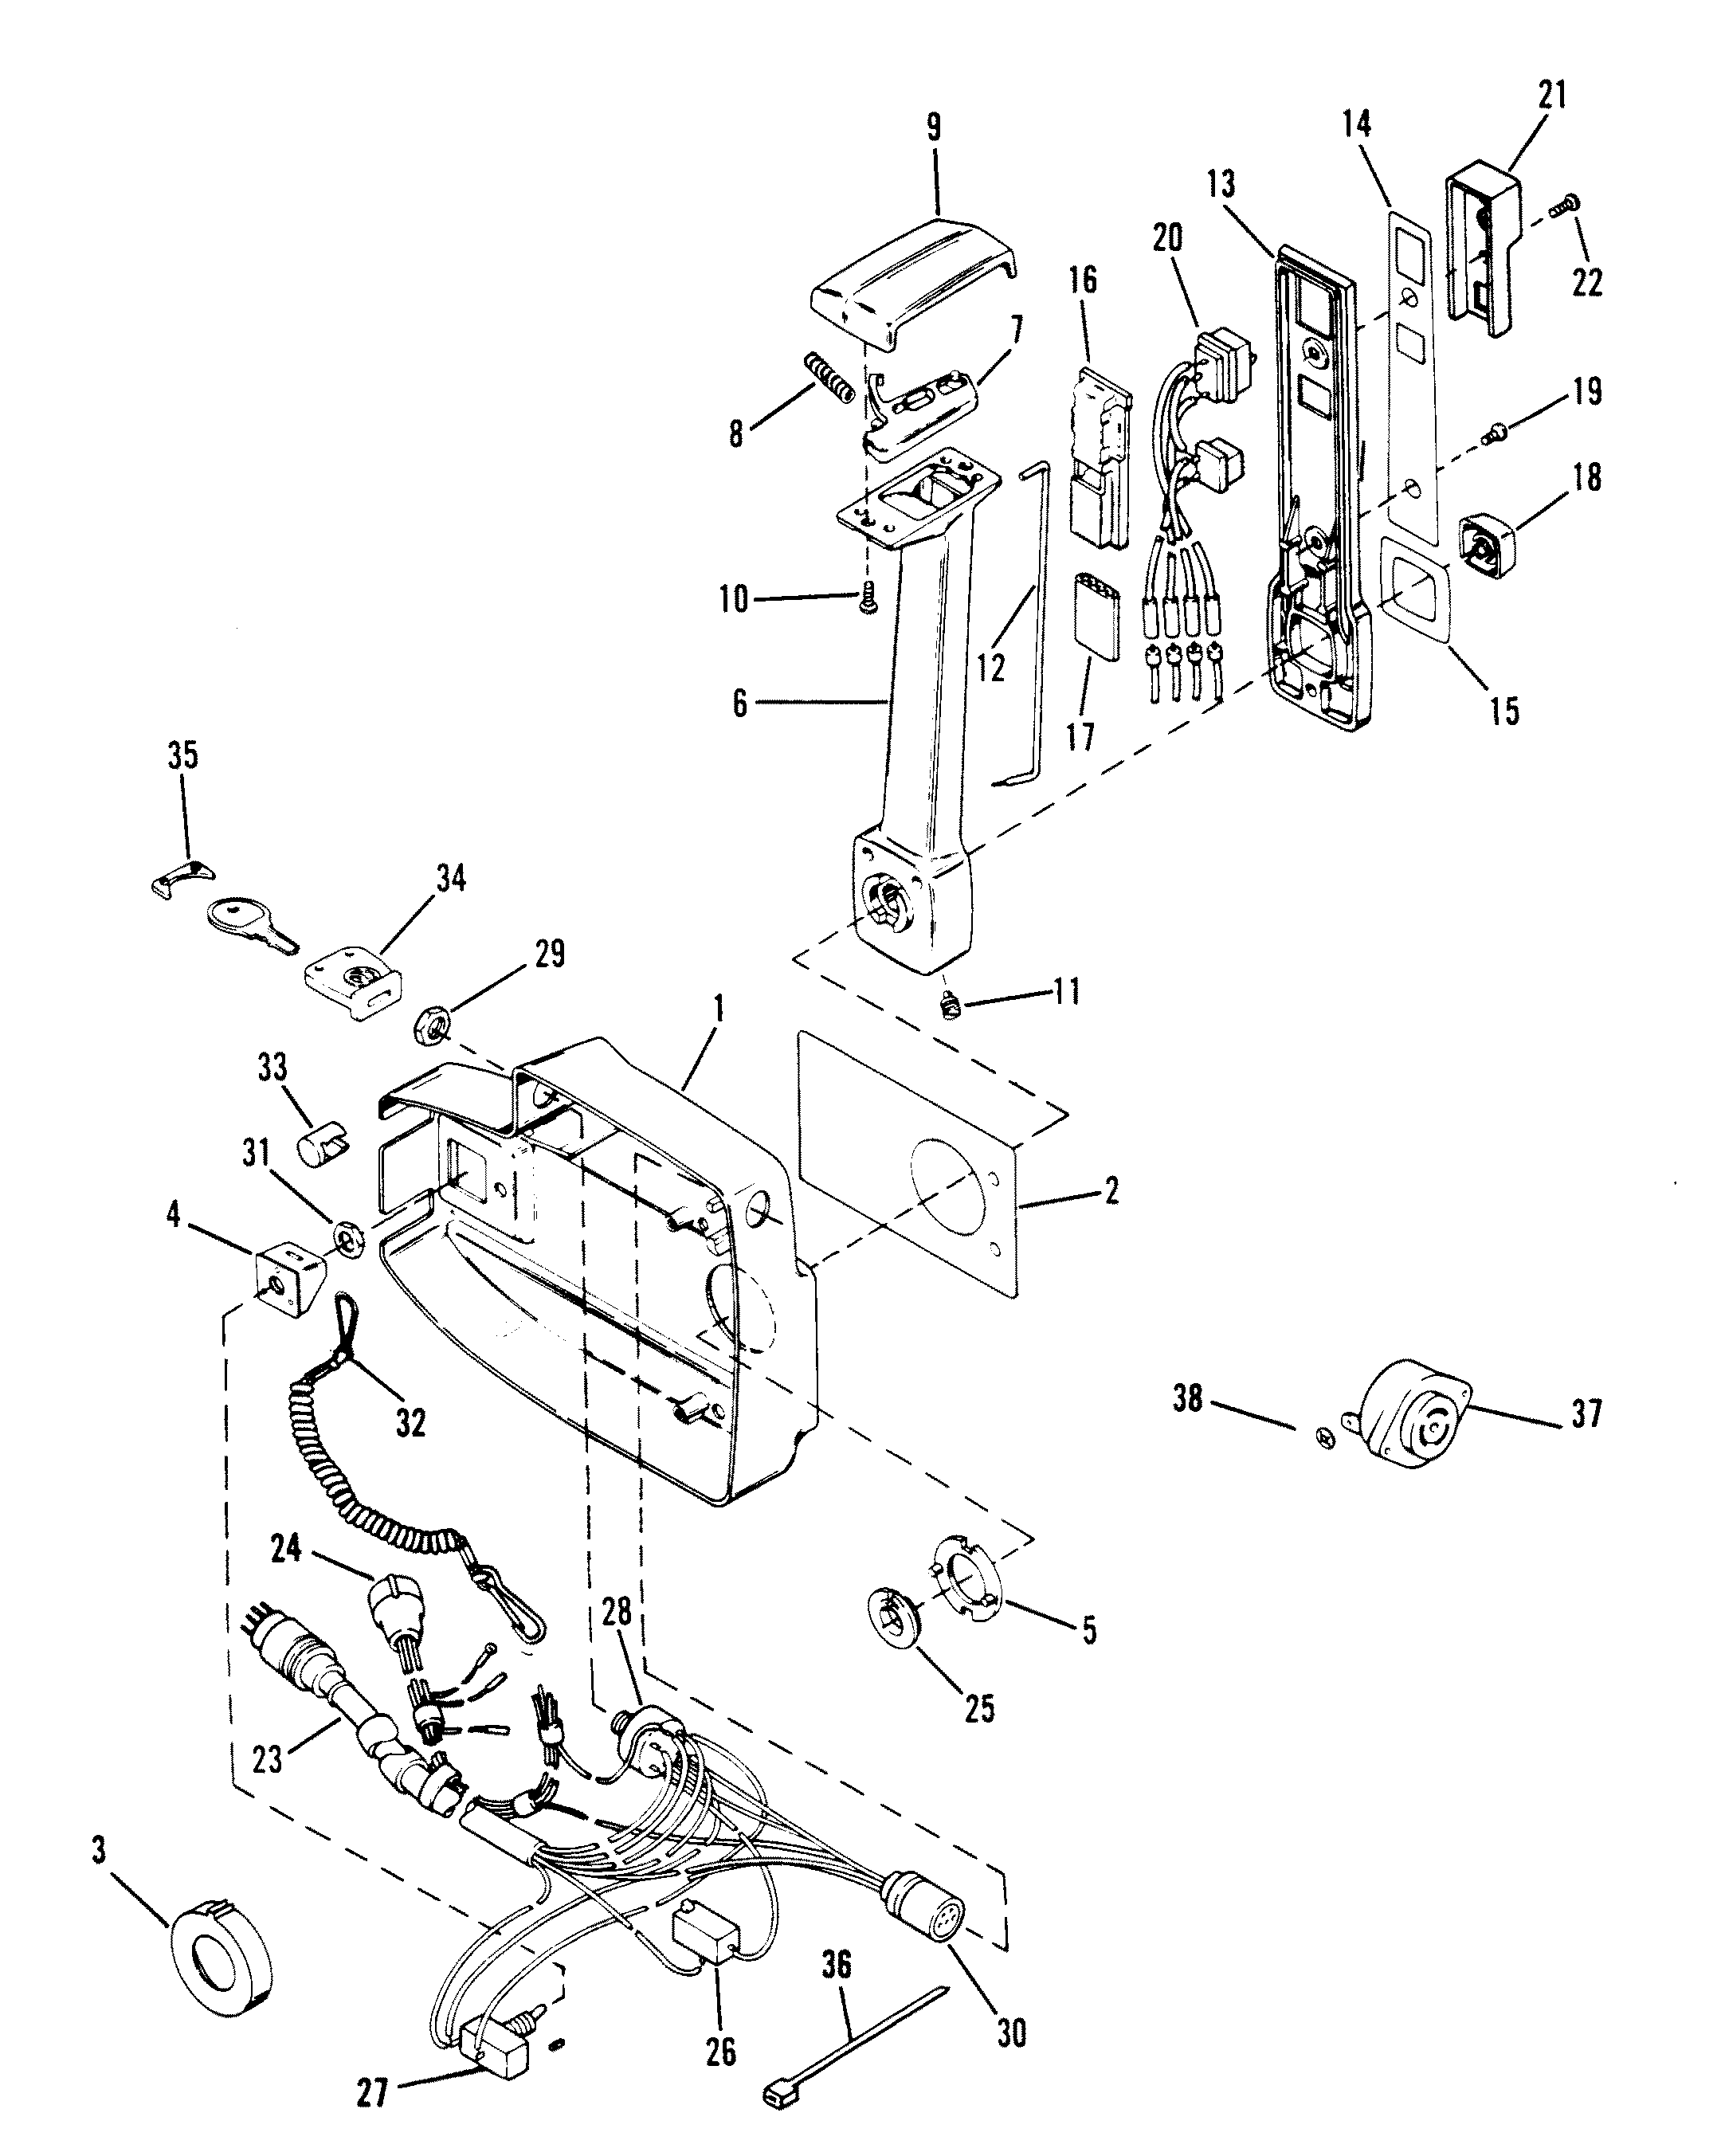 1999 regal boat 4.3l throttle body wiring diagram